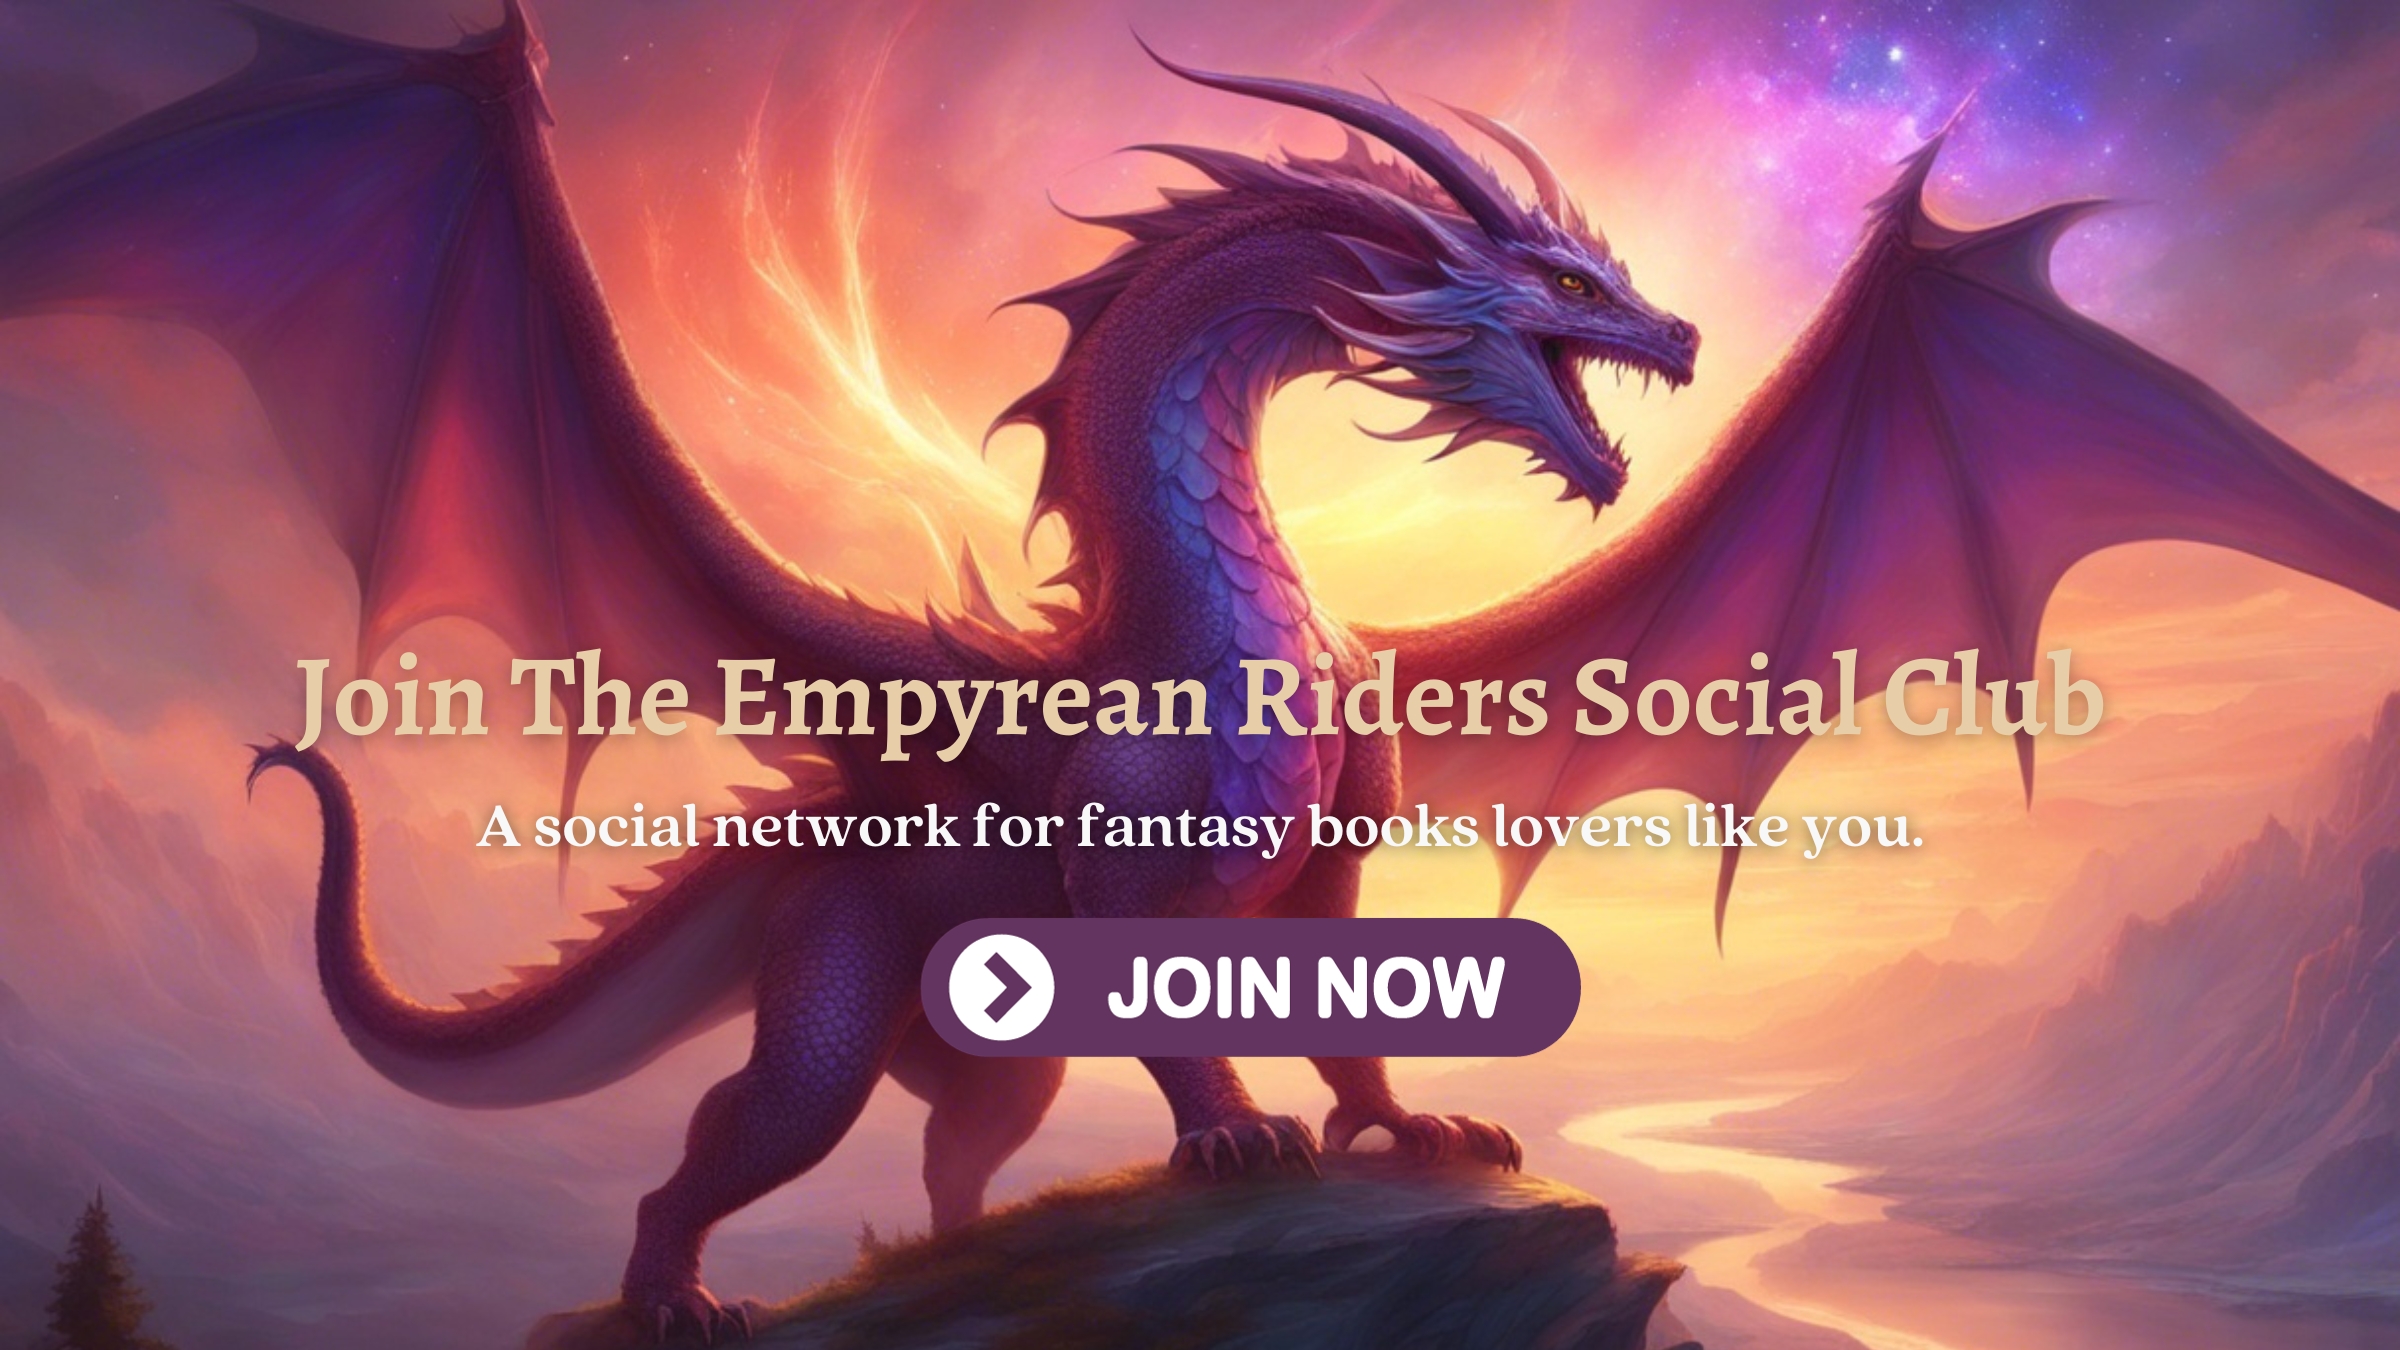 HUGE NEWS – Empyrean Riders Social Club